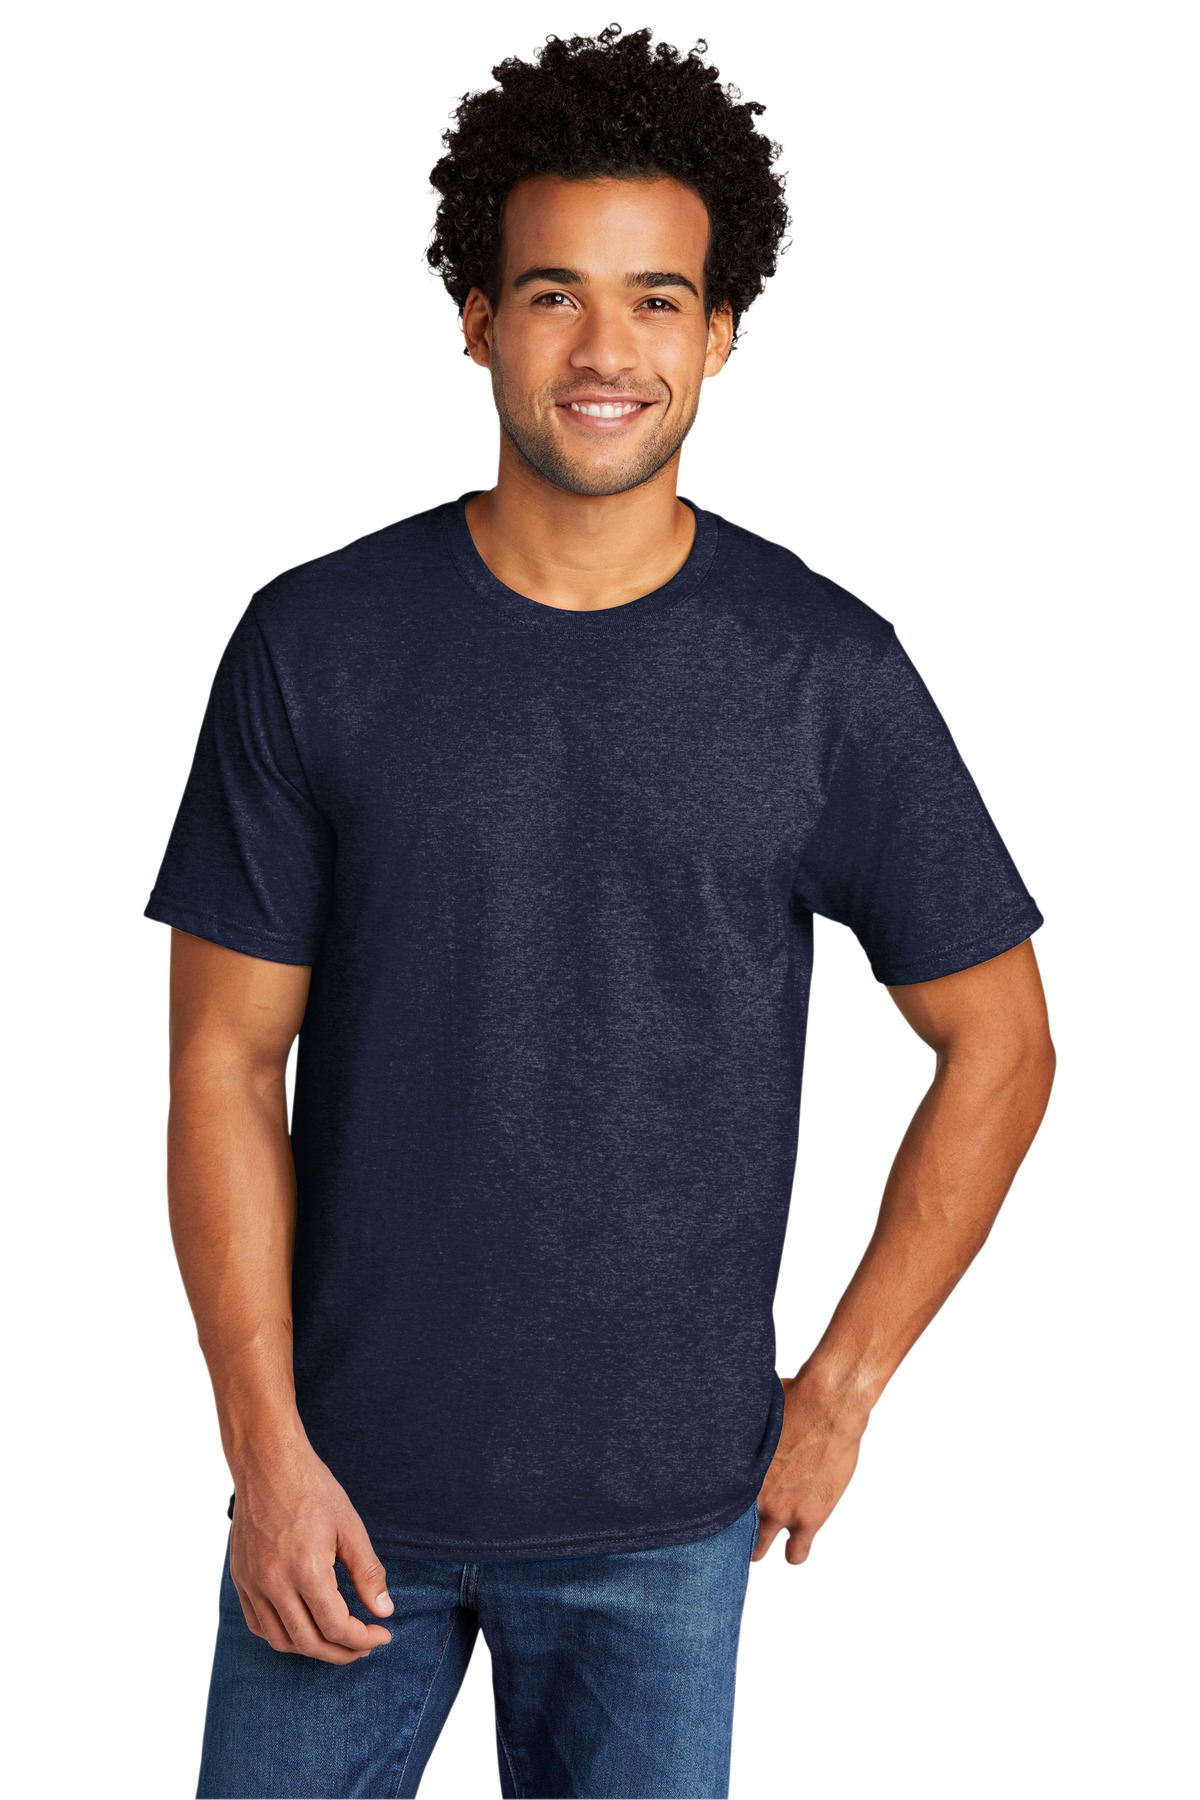 Blend Pc330 | & Jiffy Shirts Company Port Tee Tri